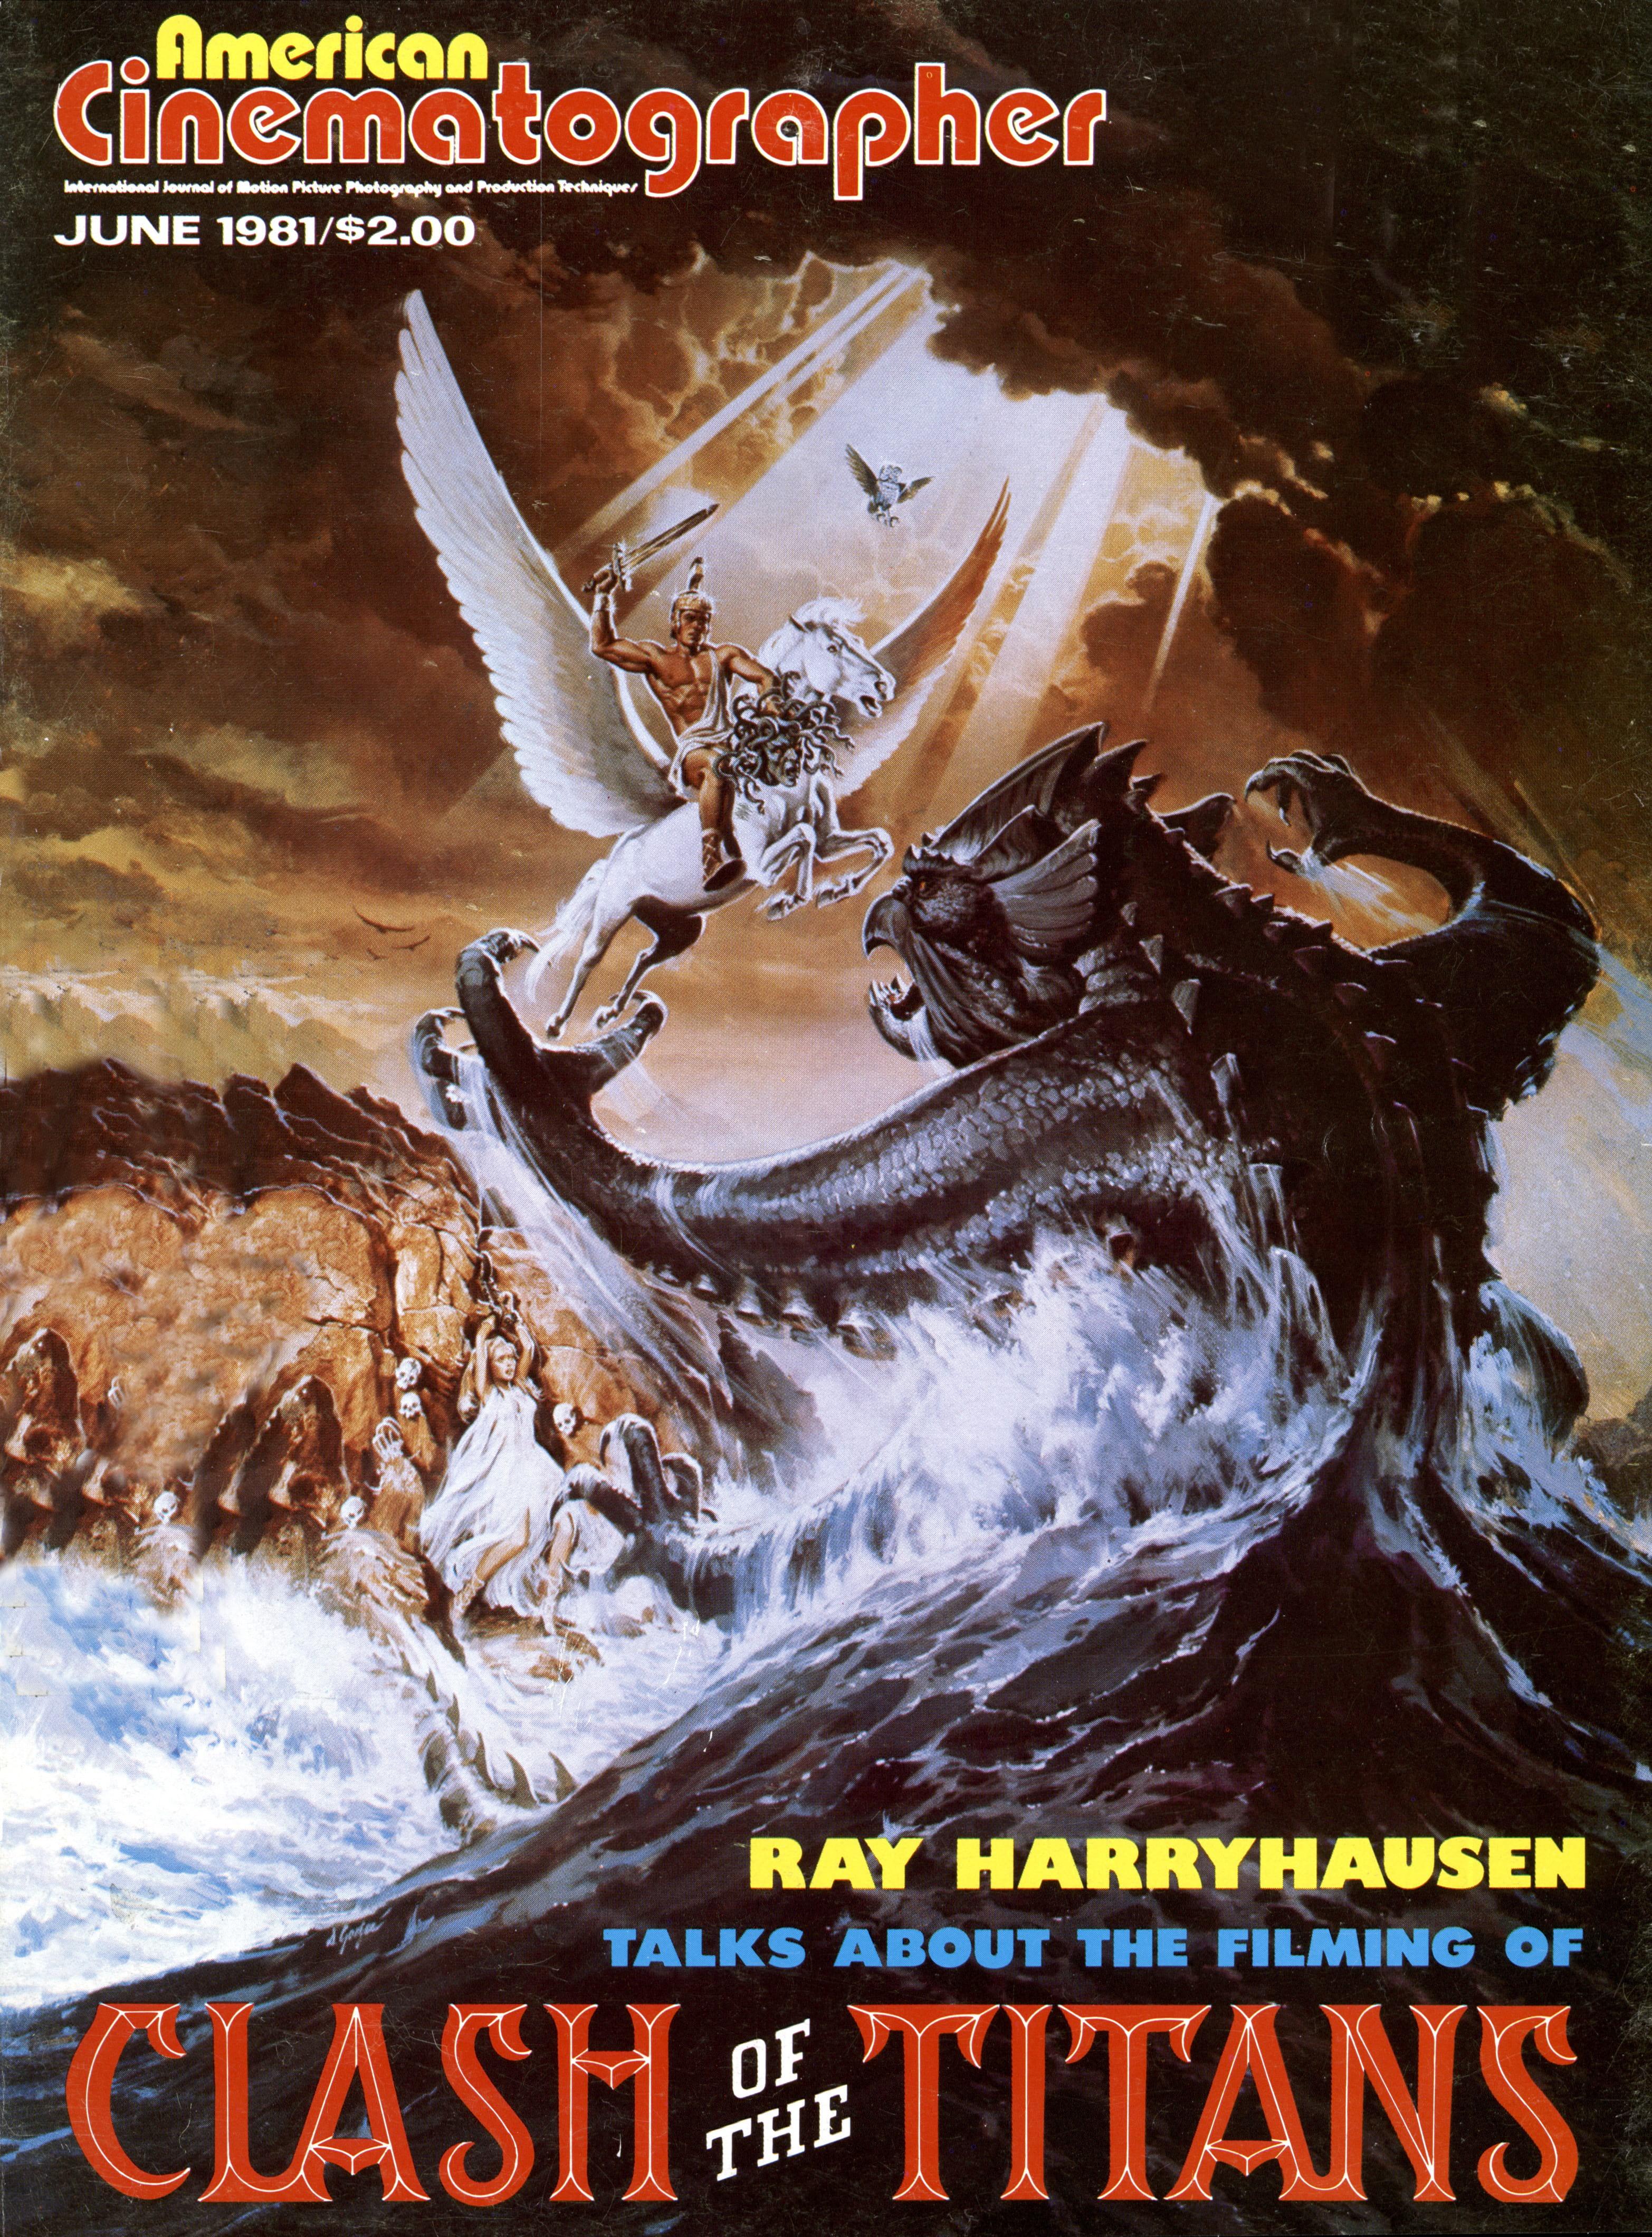 Ray Harryhausen : Clash of the Titans (1981) » ShotOnWhat? Behind